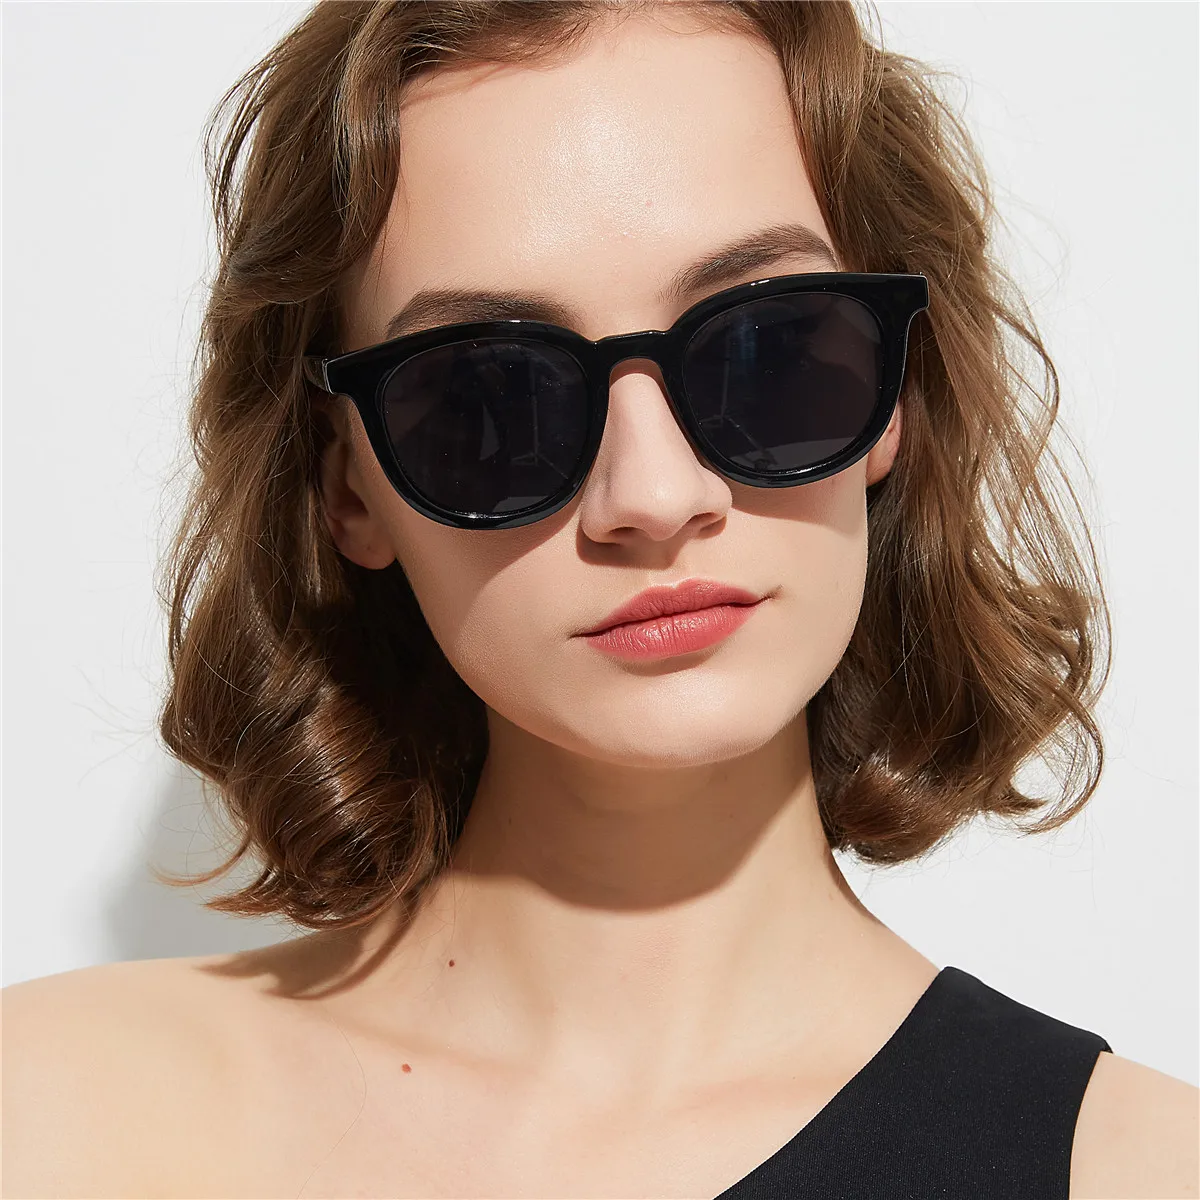 sun glasses 2019 fashionable uv 400 spectacles round sunglasses